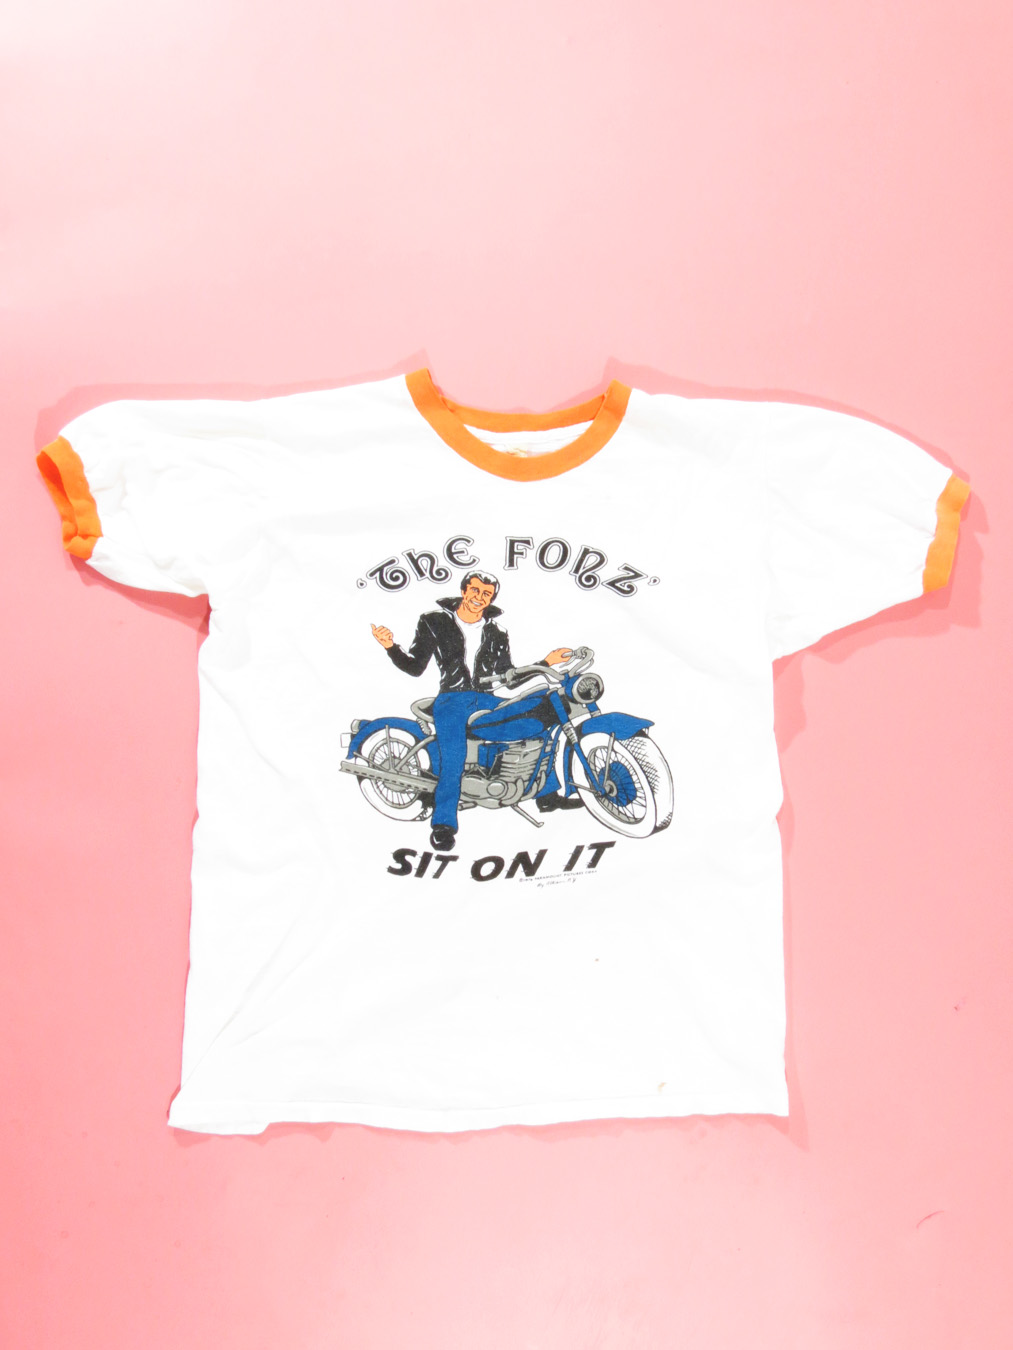 1976 happy days fonzie Tシャツ AAAAAY 青